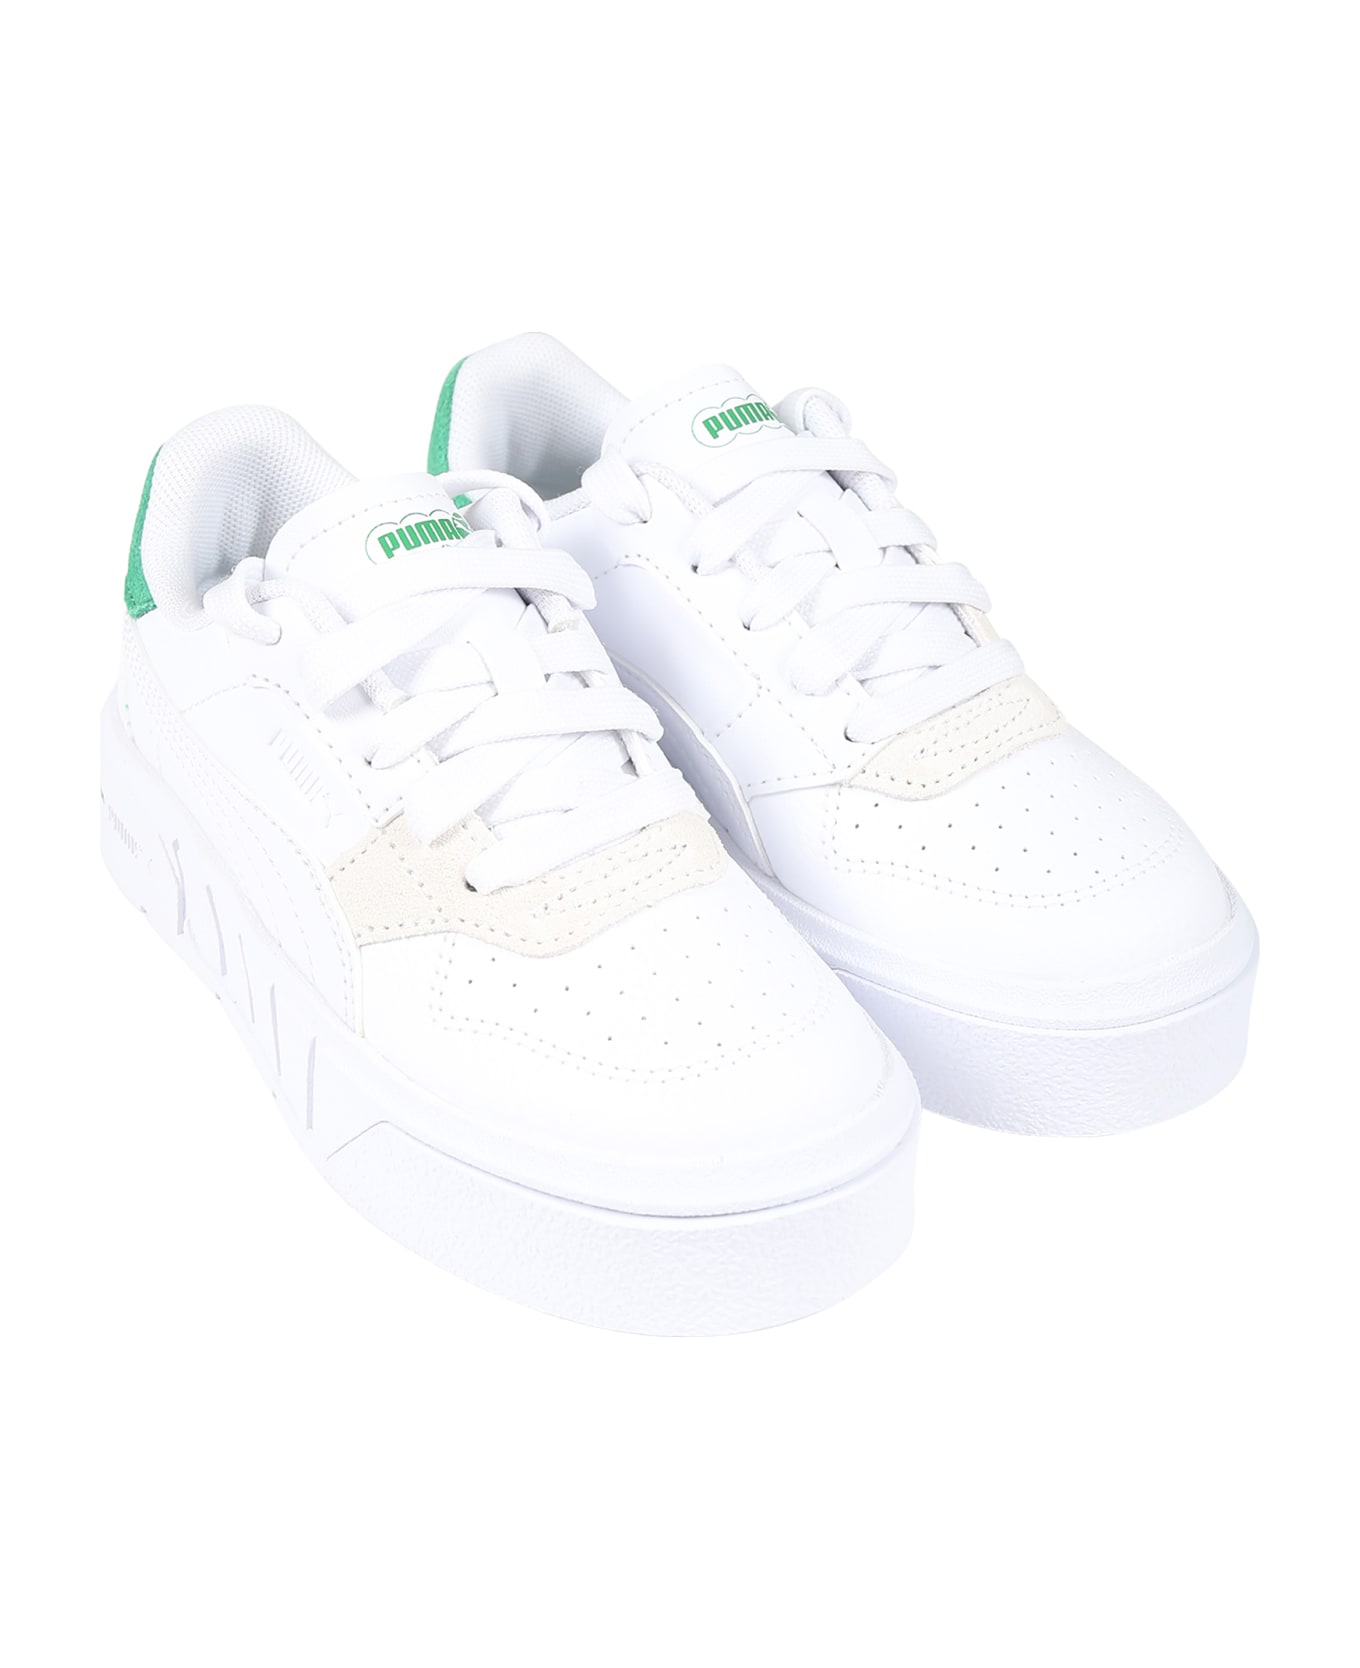 Puma White Sneakers For Kids - White シューズ